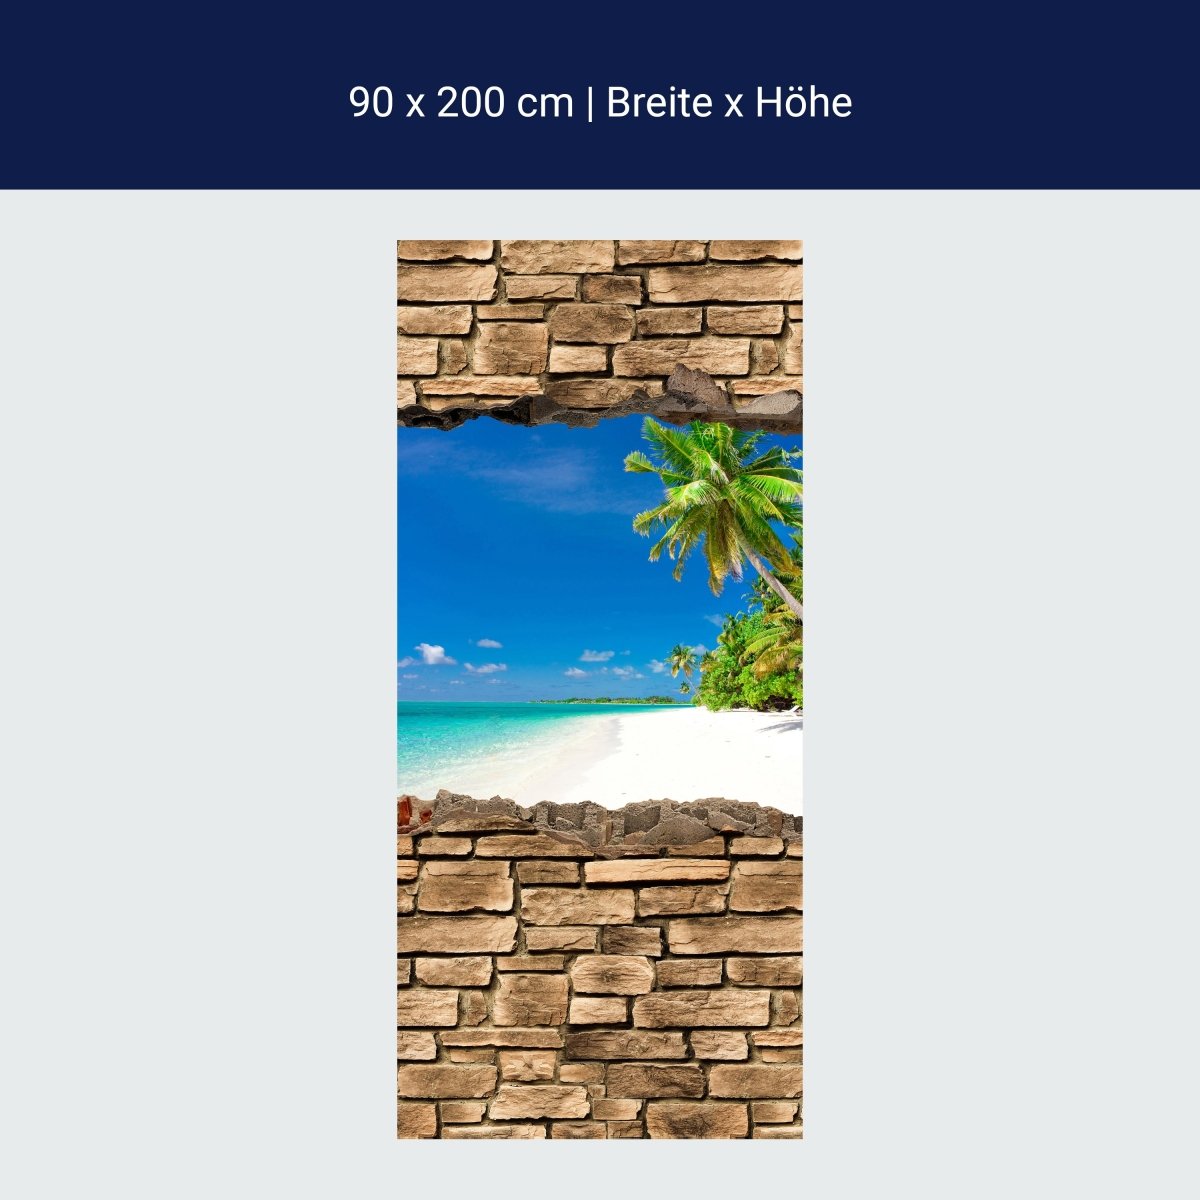 Shower wall 3D South Seas - stone wall M0647